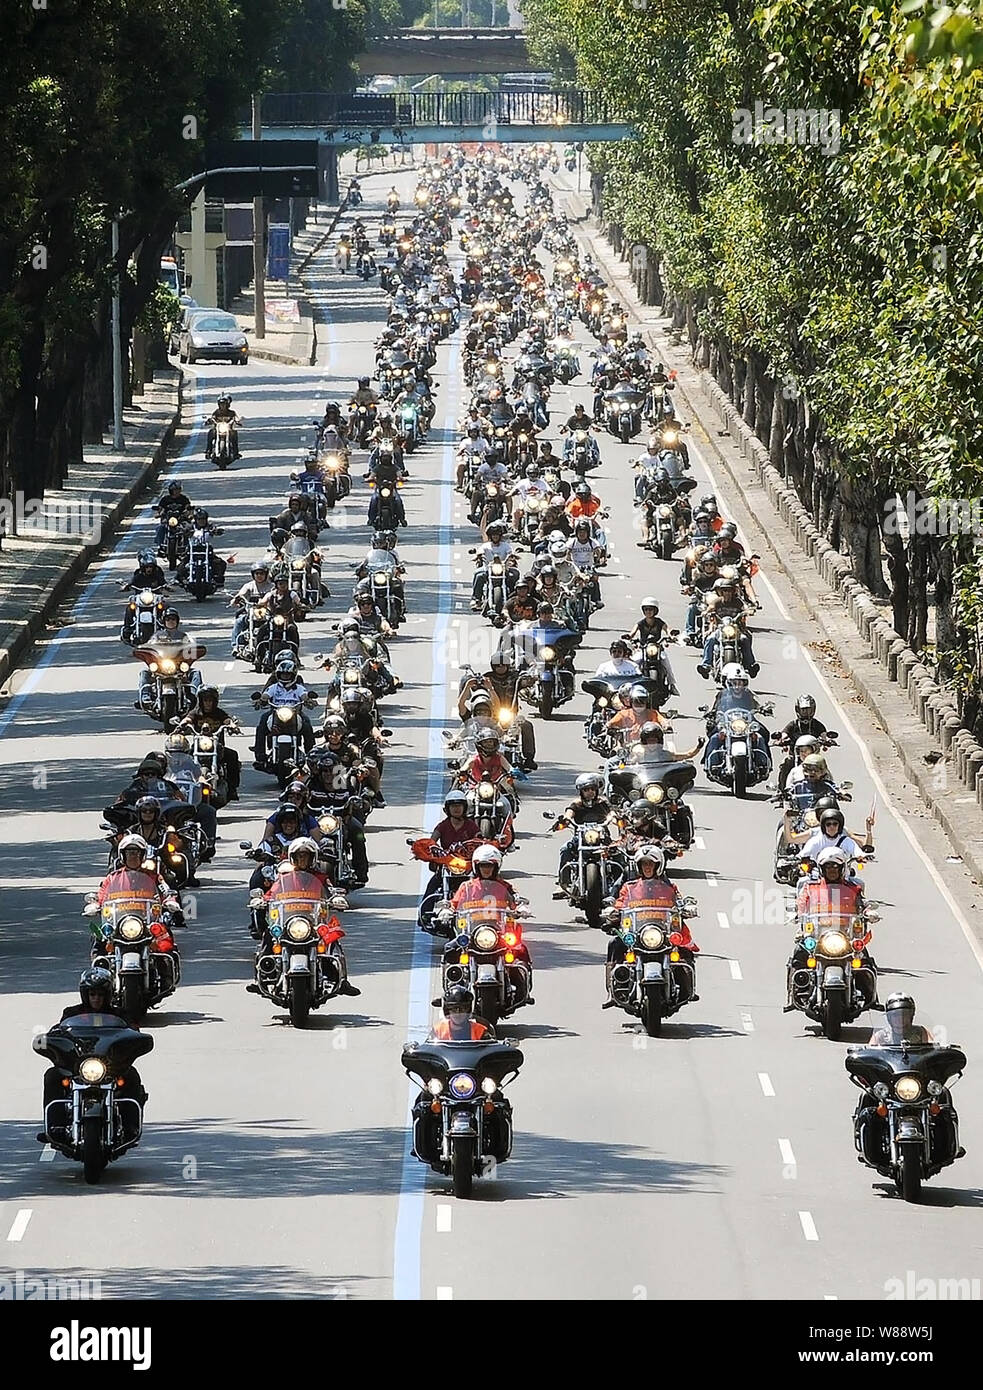 Rio de Janeiro, December 11, 2009. Motorcyclists with their Harley Davidson motorcycles rotate through the streets of downtown Rio de Janeiro, Brazil Stock Photo